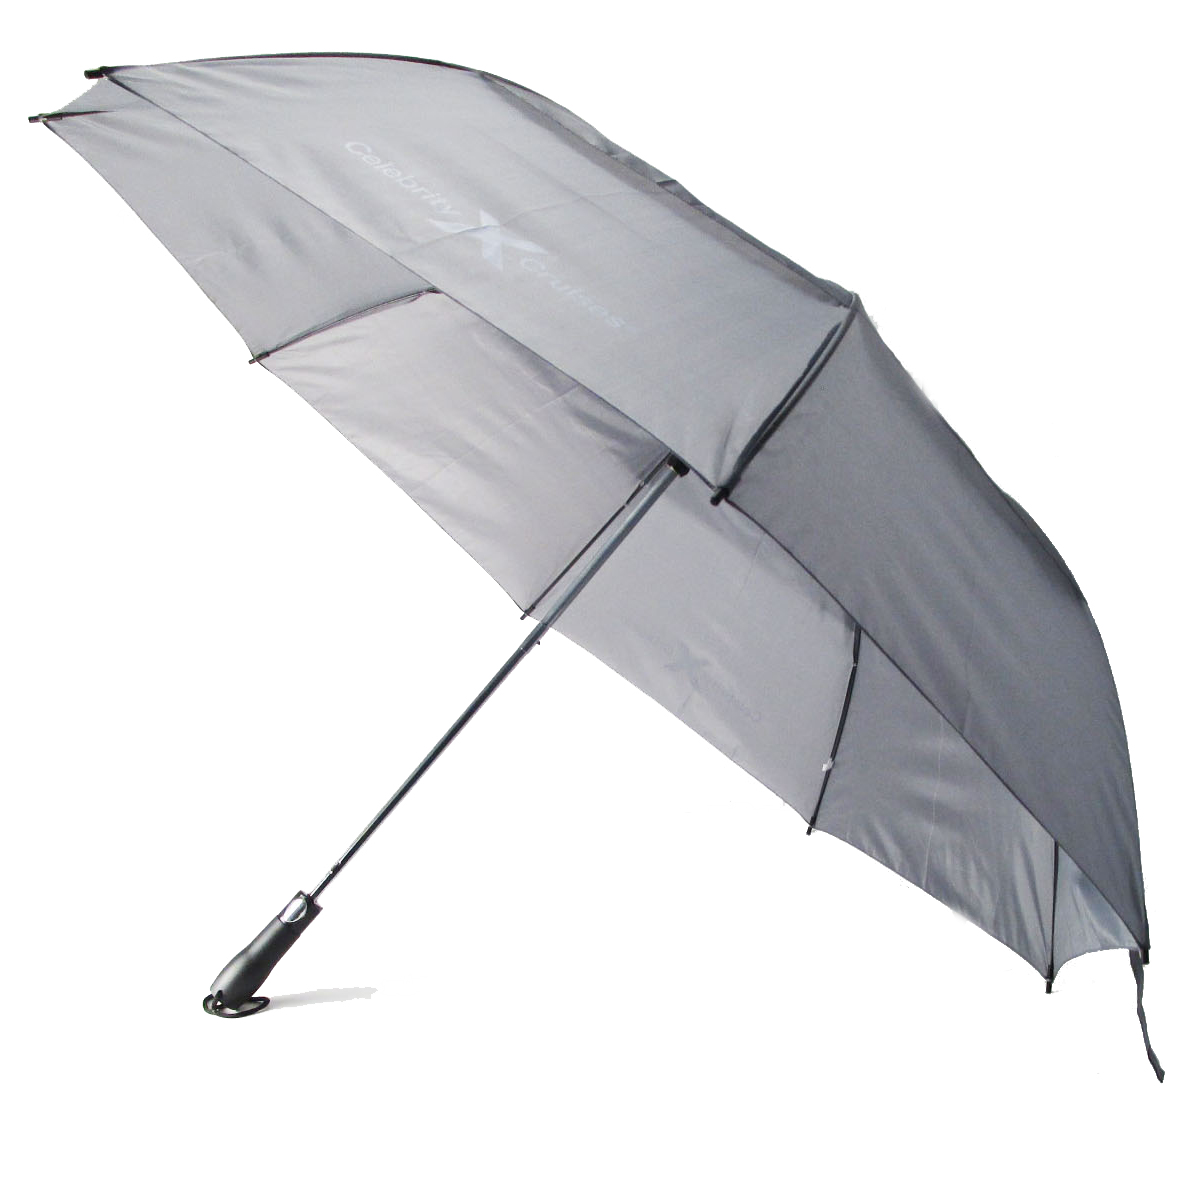 Umbrella for Royal Caribbean 